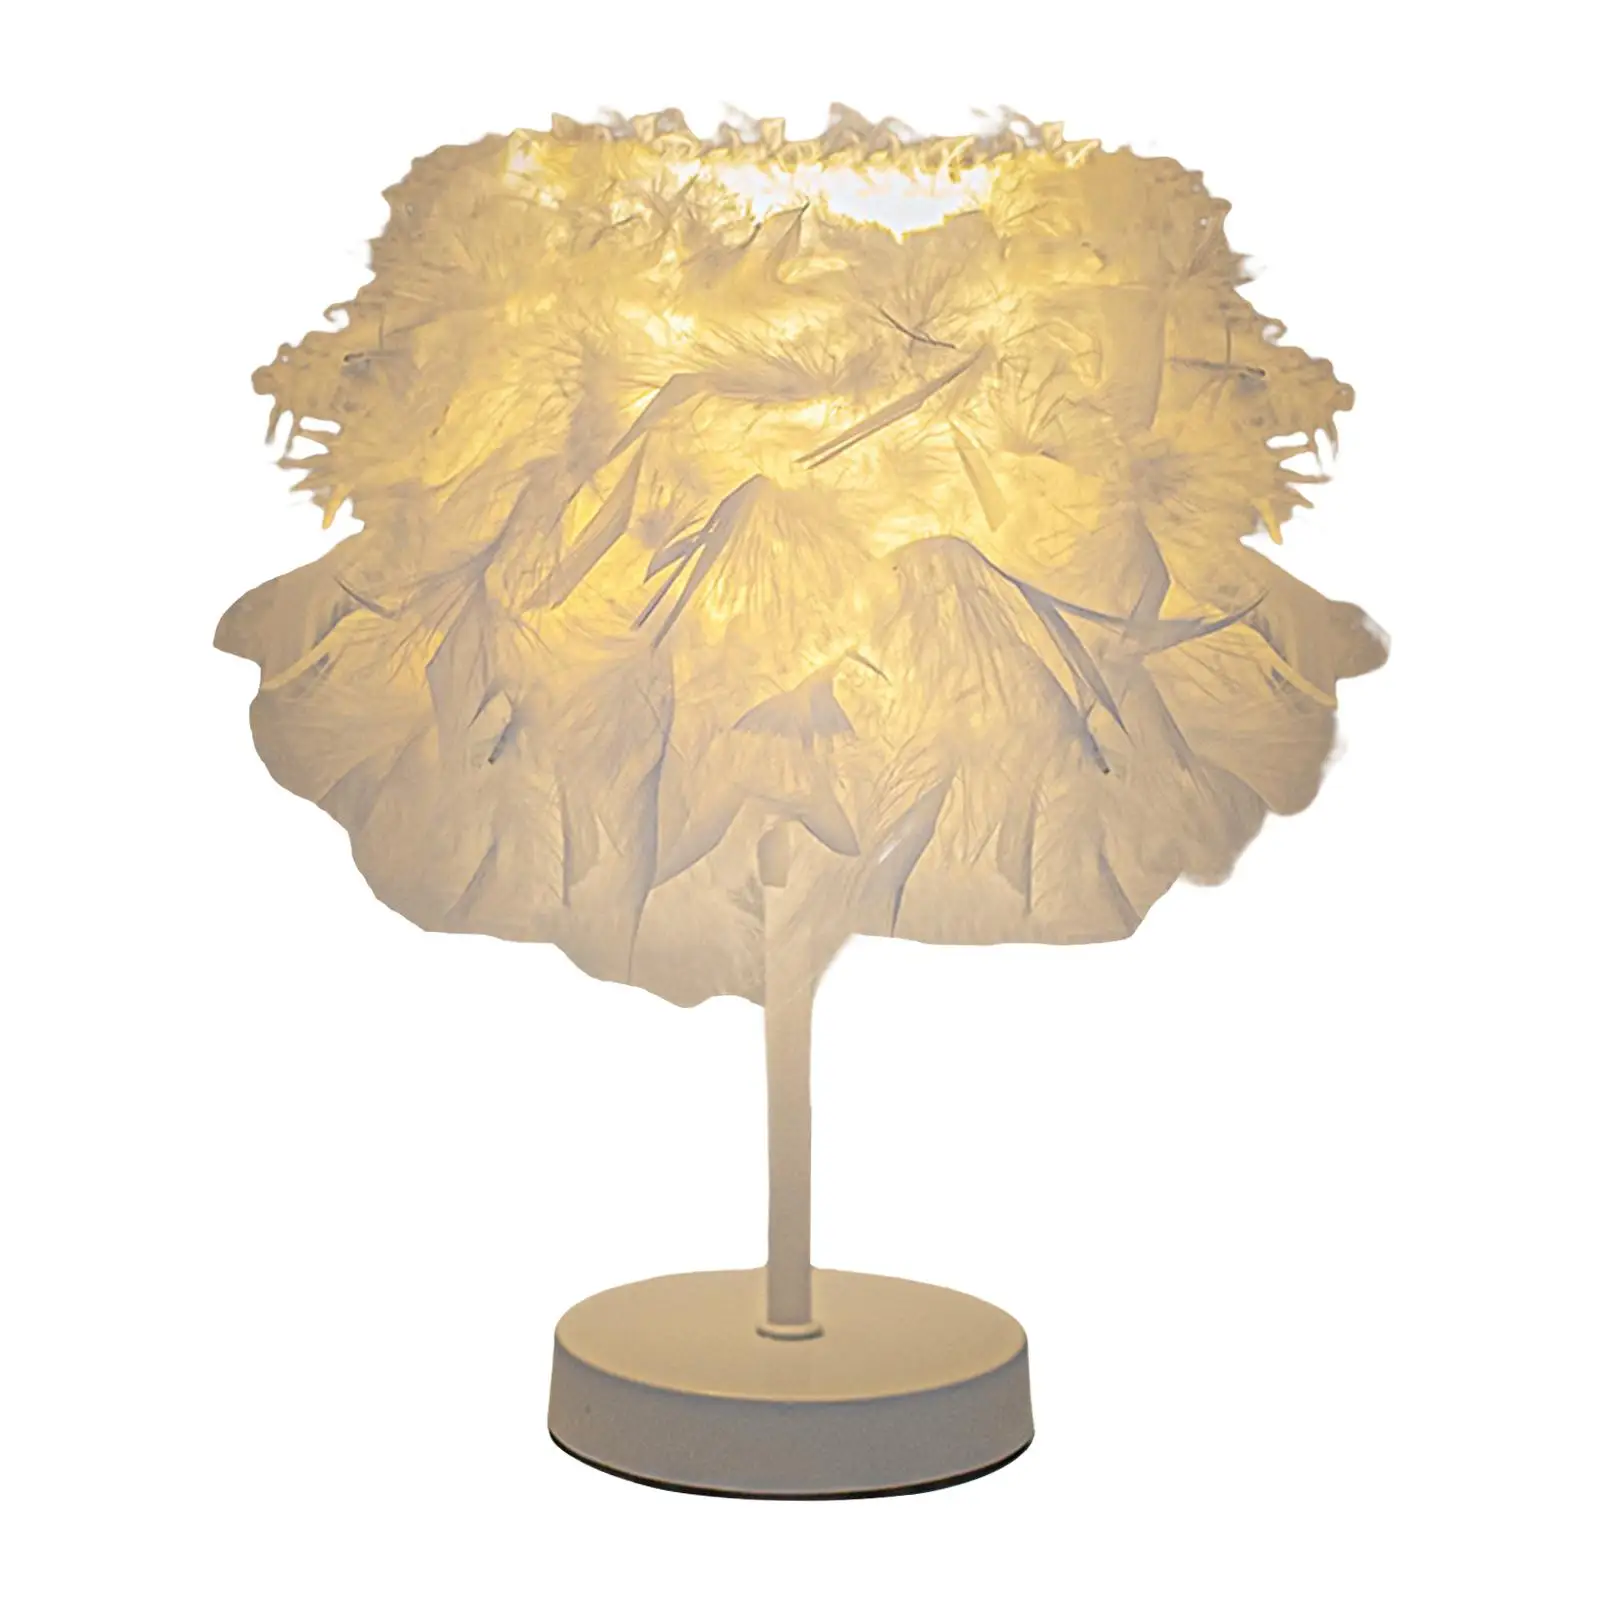 Romantic Feather Shade Table Lamp Fixture Night Lights Decorative Lantern Desk